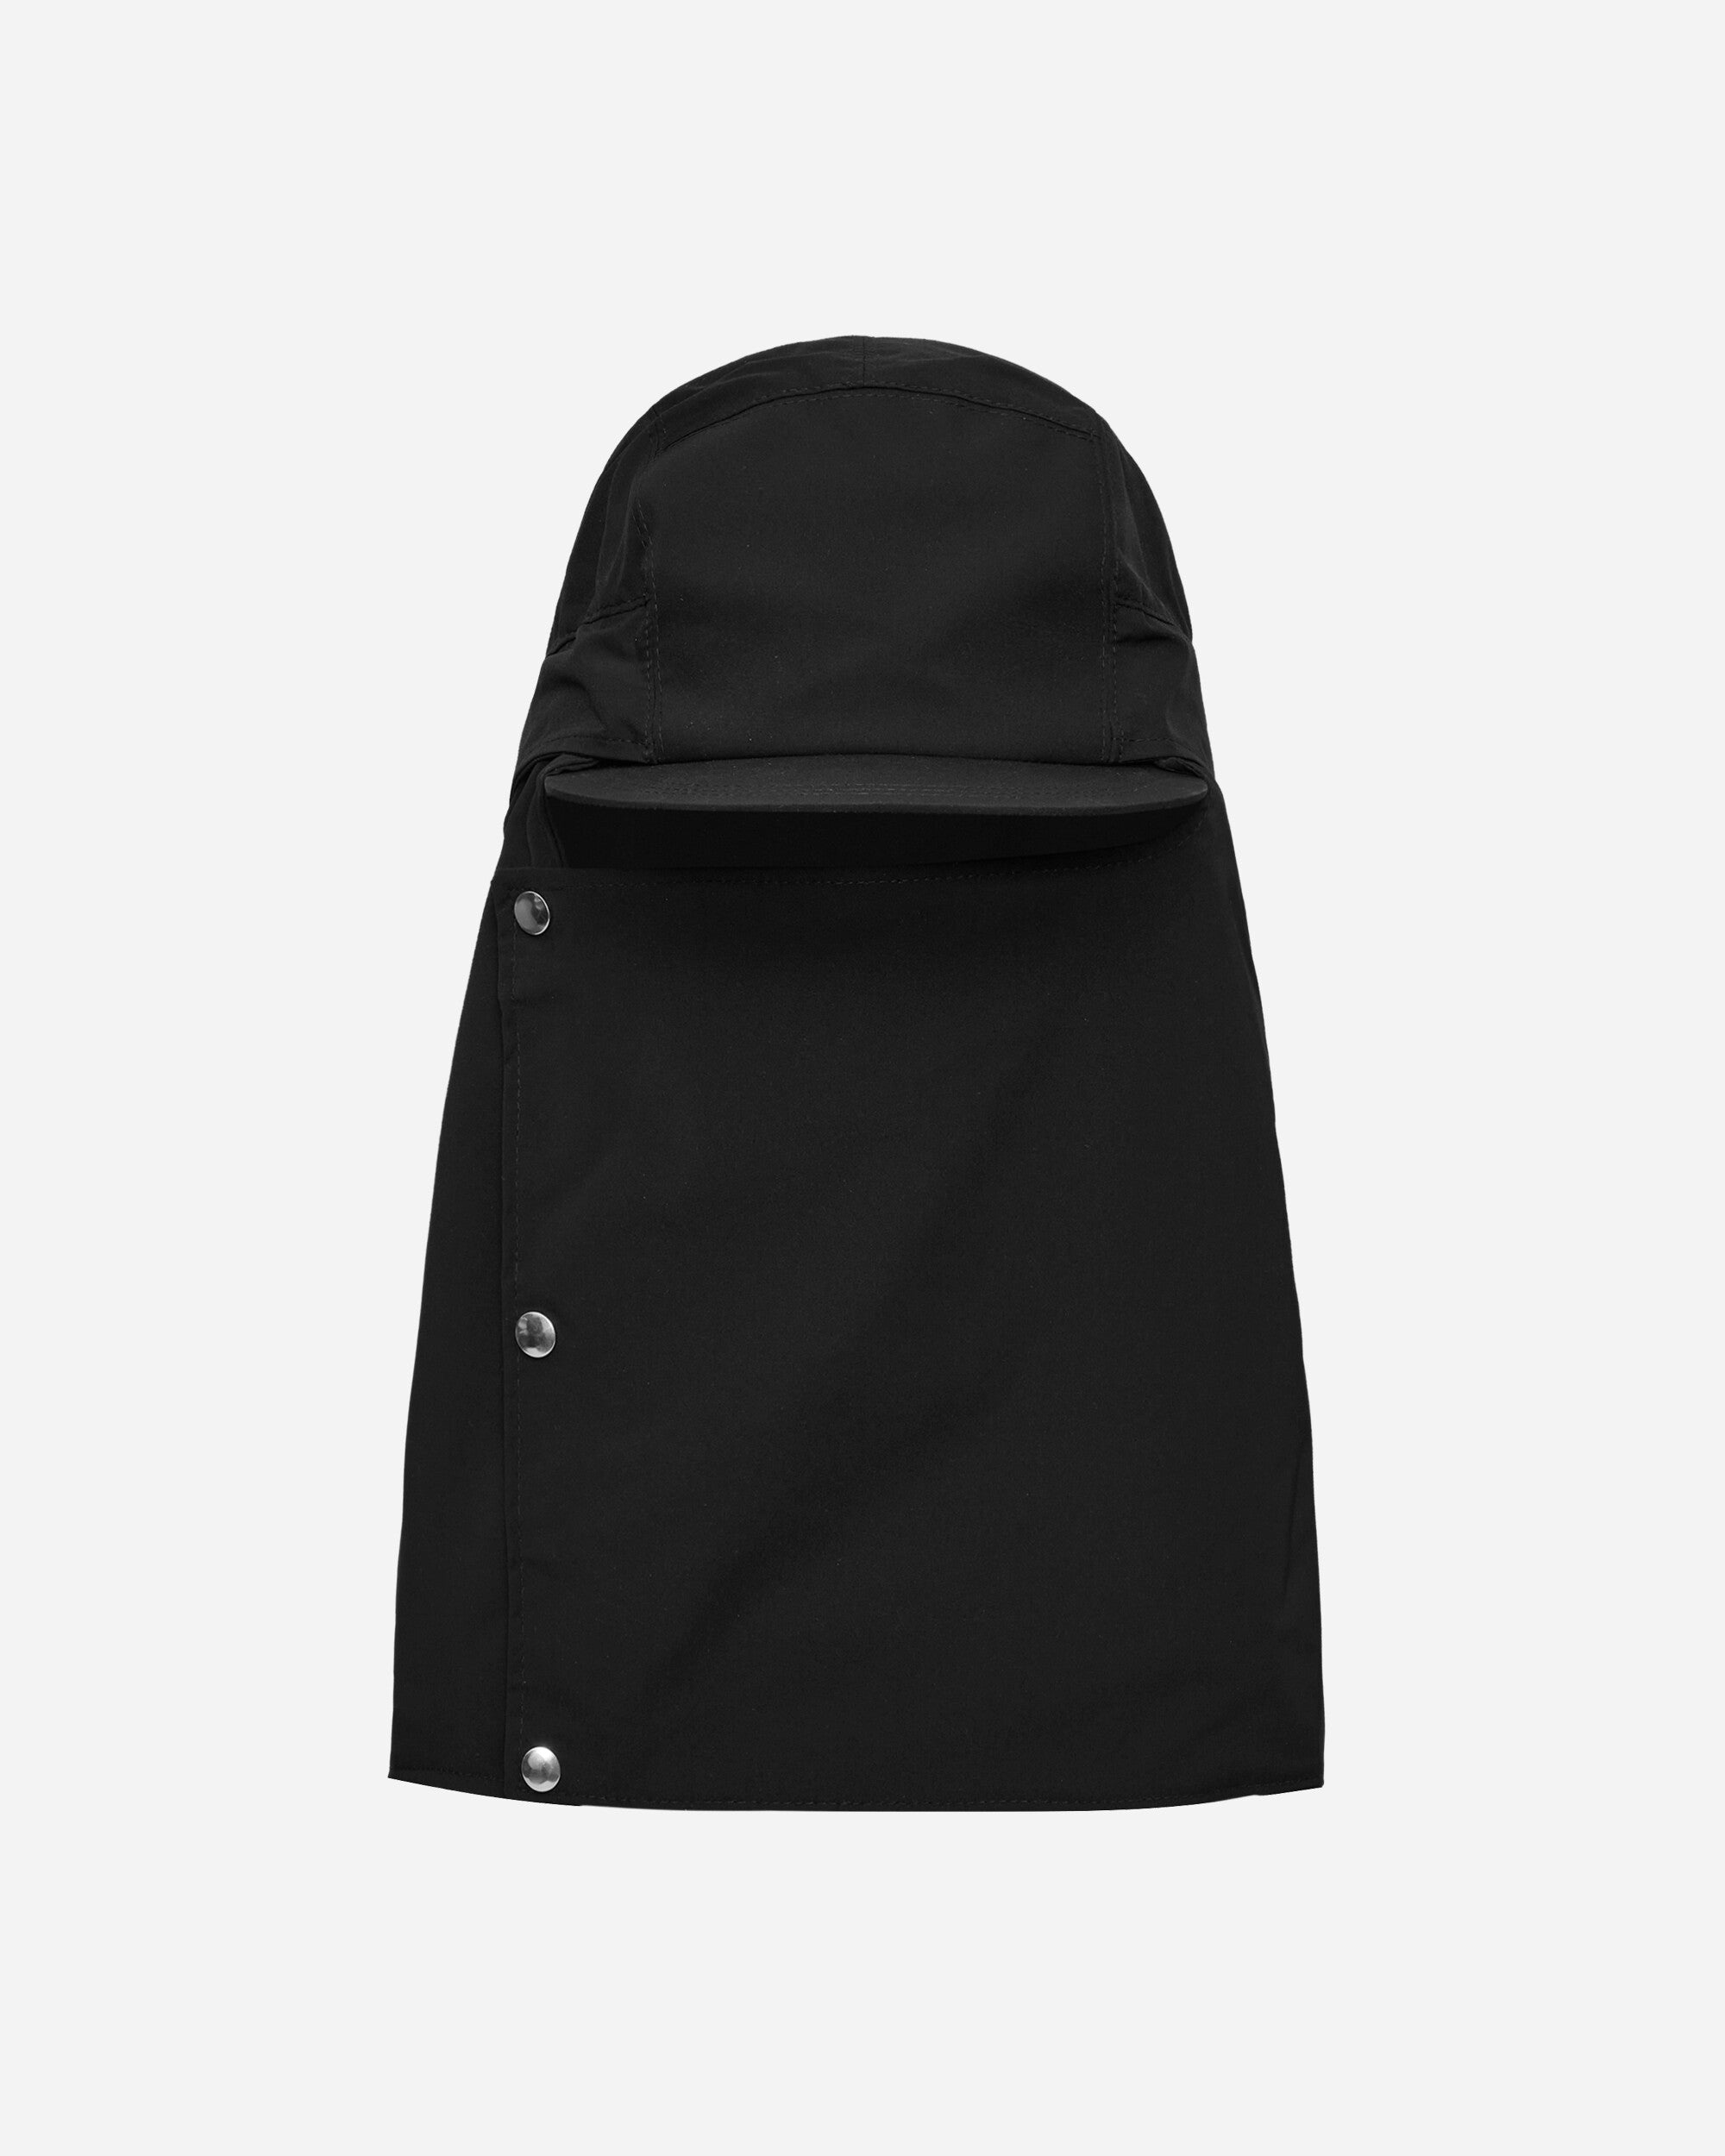 Veiled Cap Black - 1